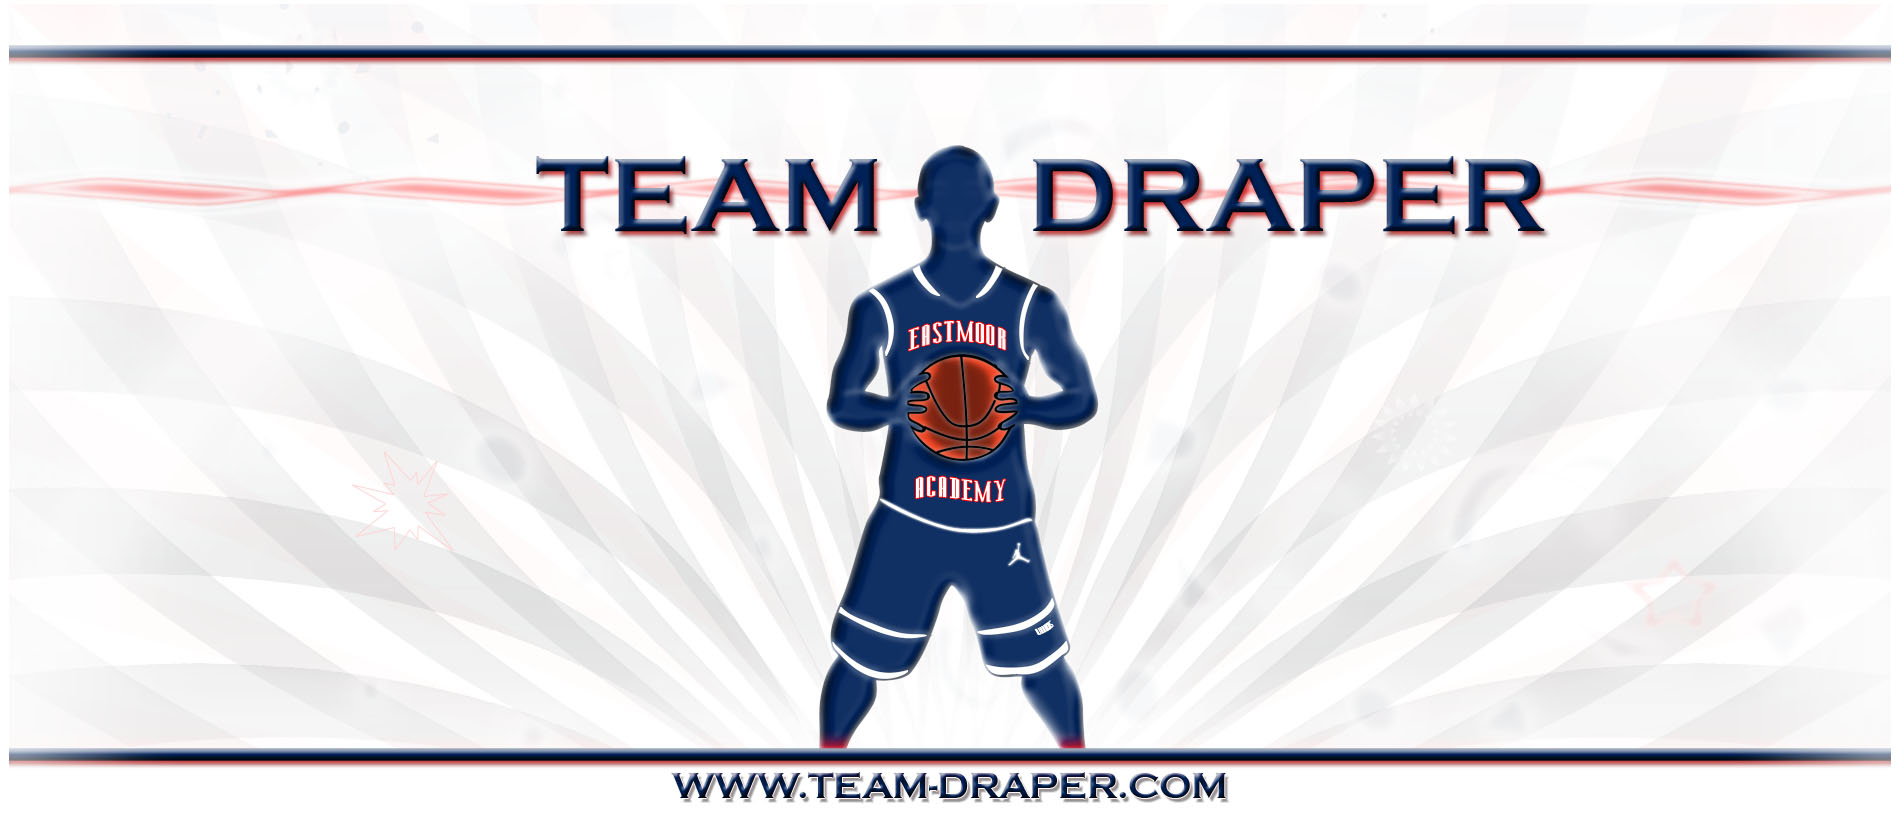 Team-Draper Logo